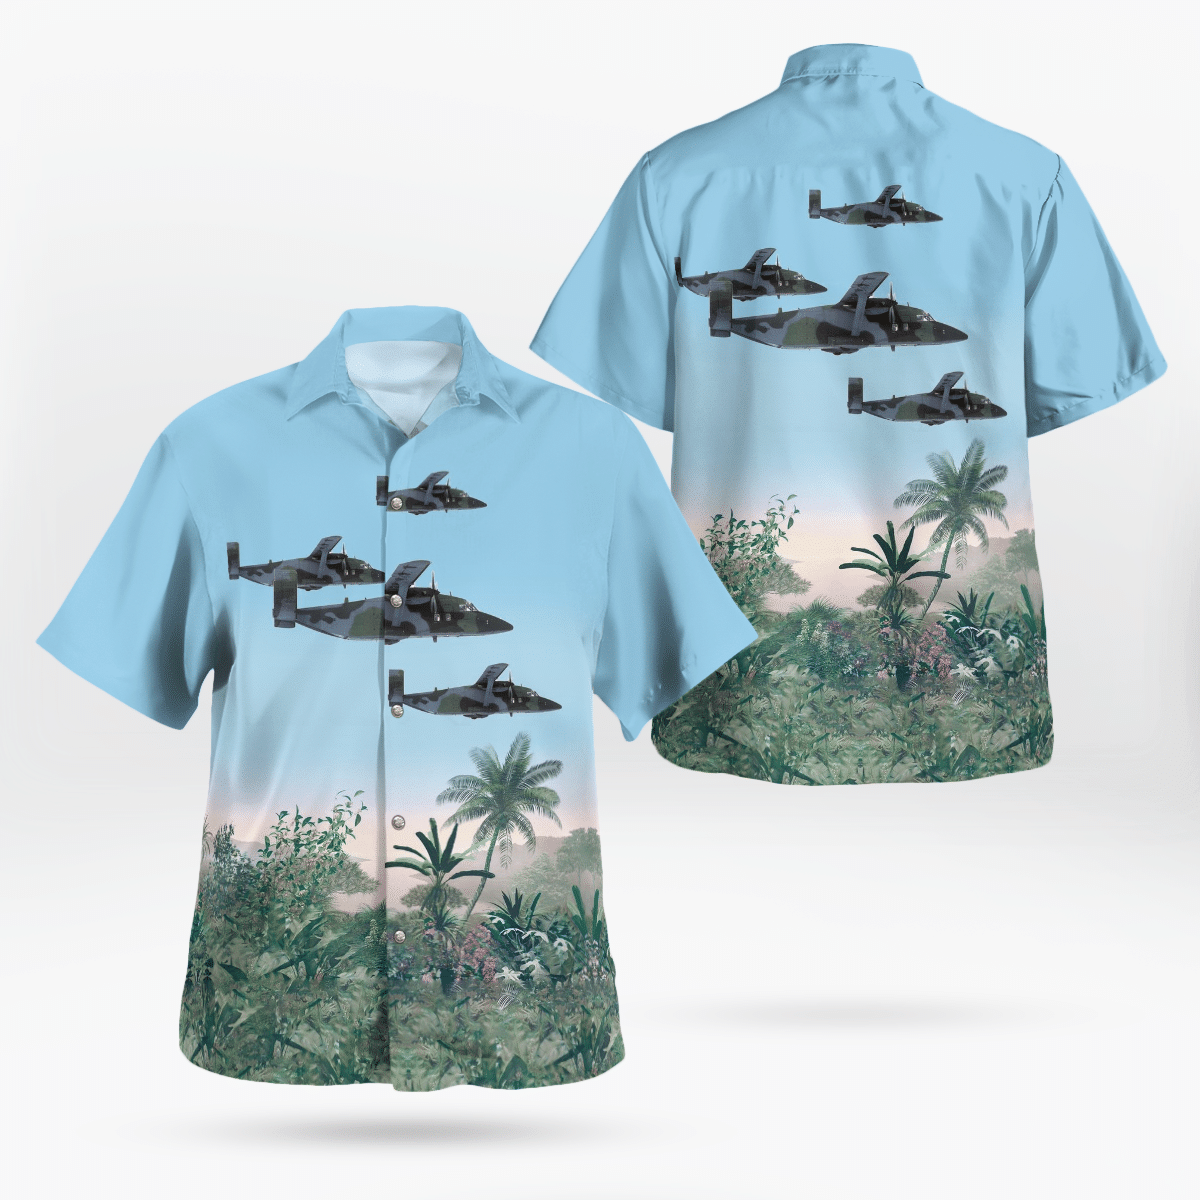 Get a new Hawaiian shirt to enjoy summer vacation 262